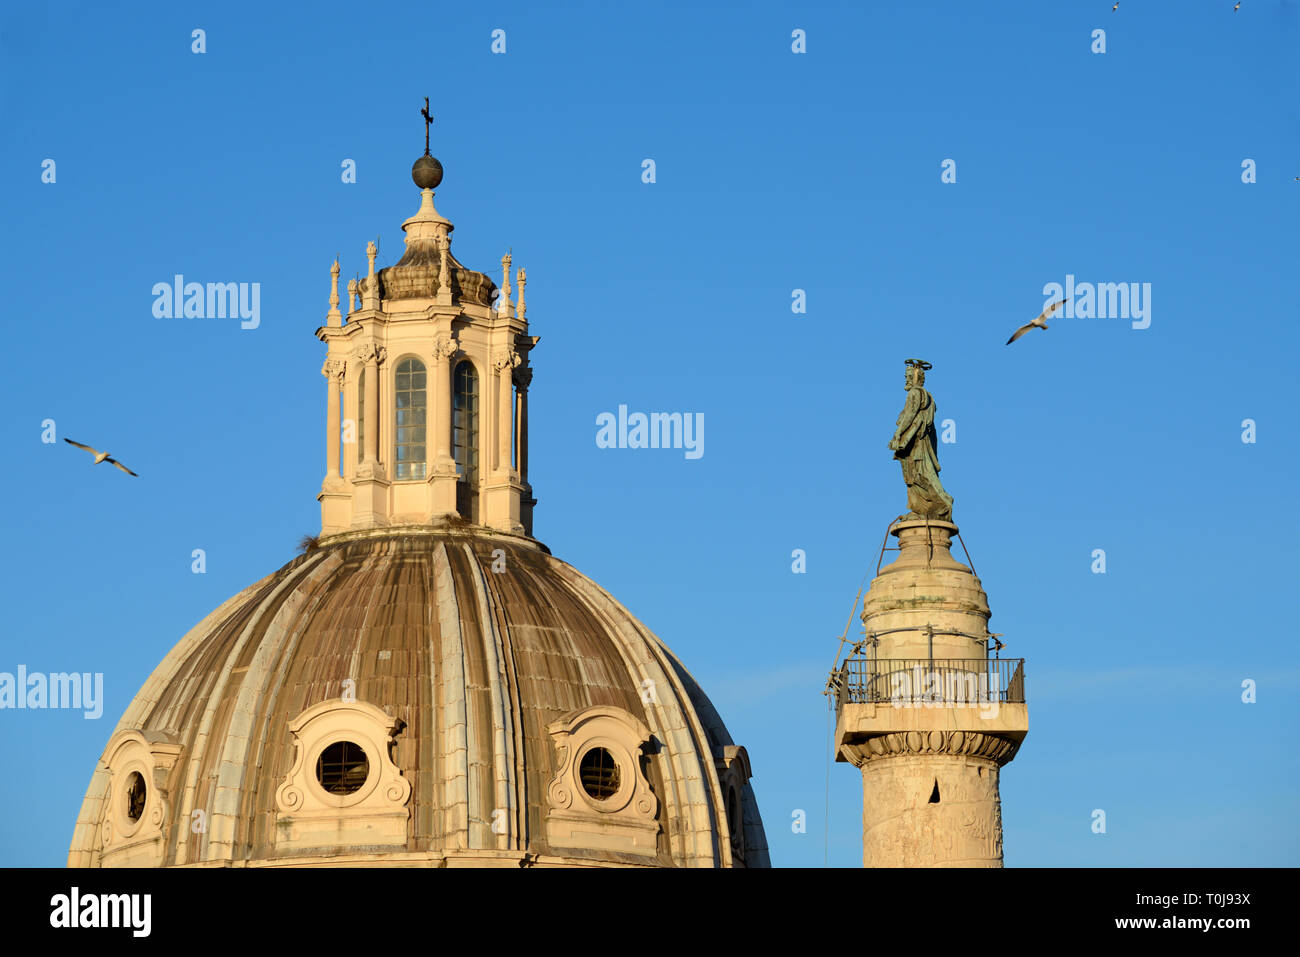 Roof Lantern, Roof Tower, Cupola or Skylight on Dome of Church of Santa Maria di Loreto (1507) & Trajan's Column (AD113) on Piazza Venezia Rome Italy Stock Photo